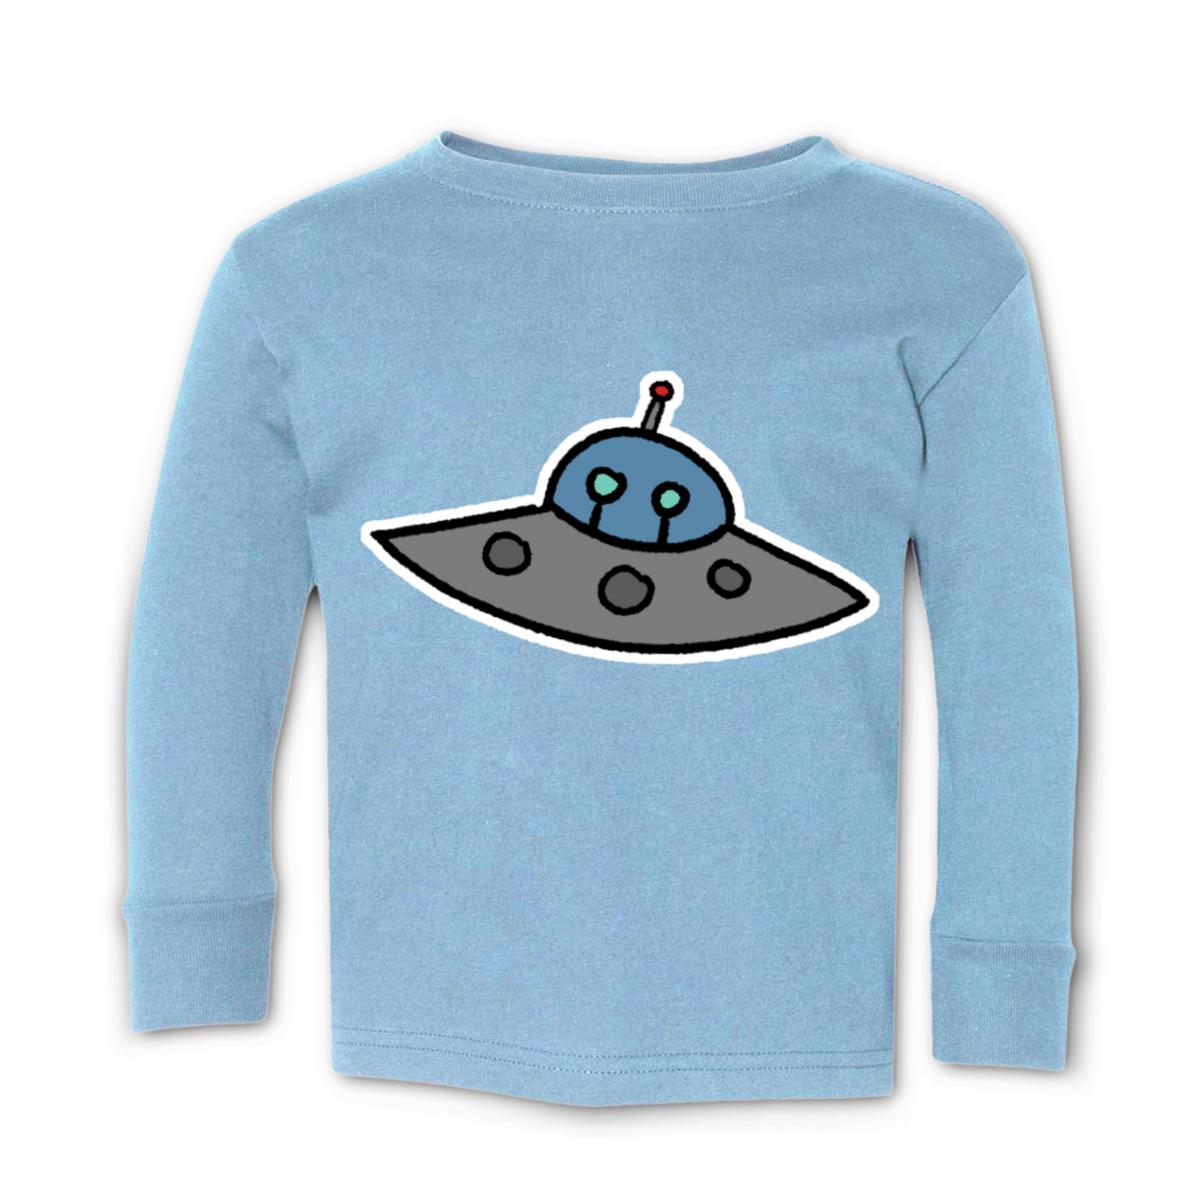 Flying Saucer Toddler Long Sleeve Tee 4T light-blue